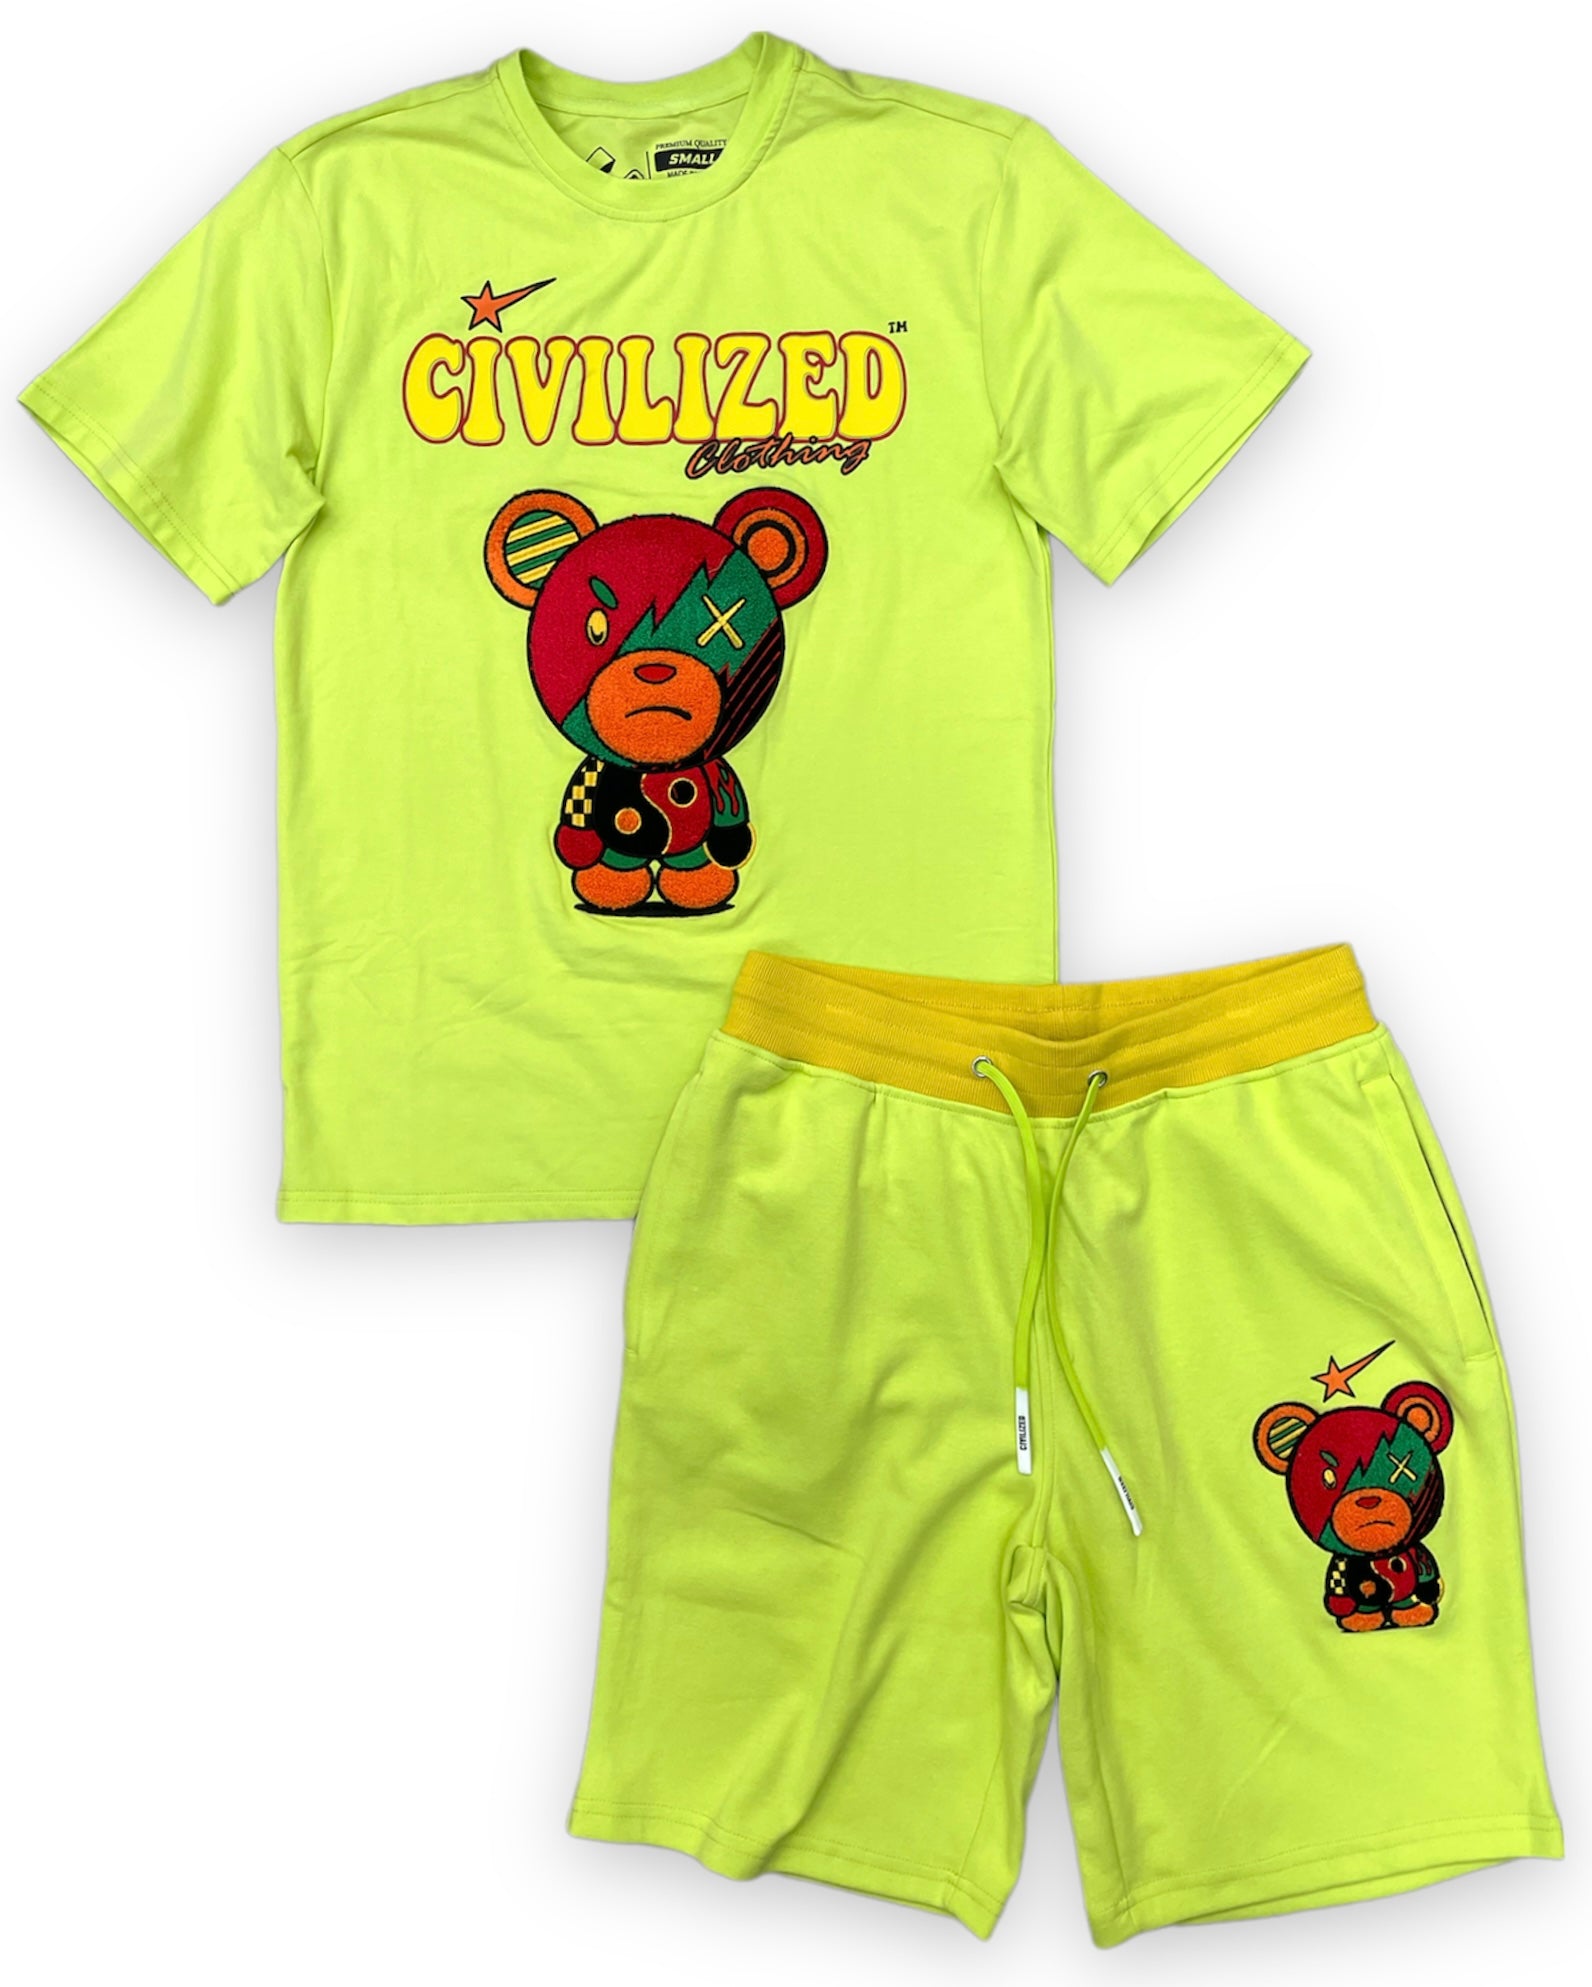 Civilized Teddy Bear Short Set